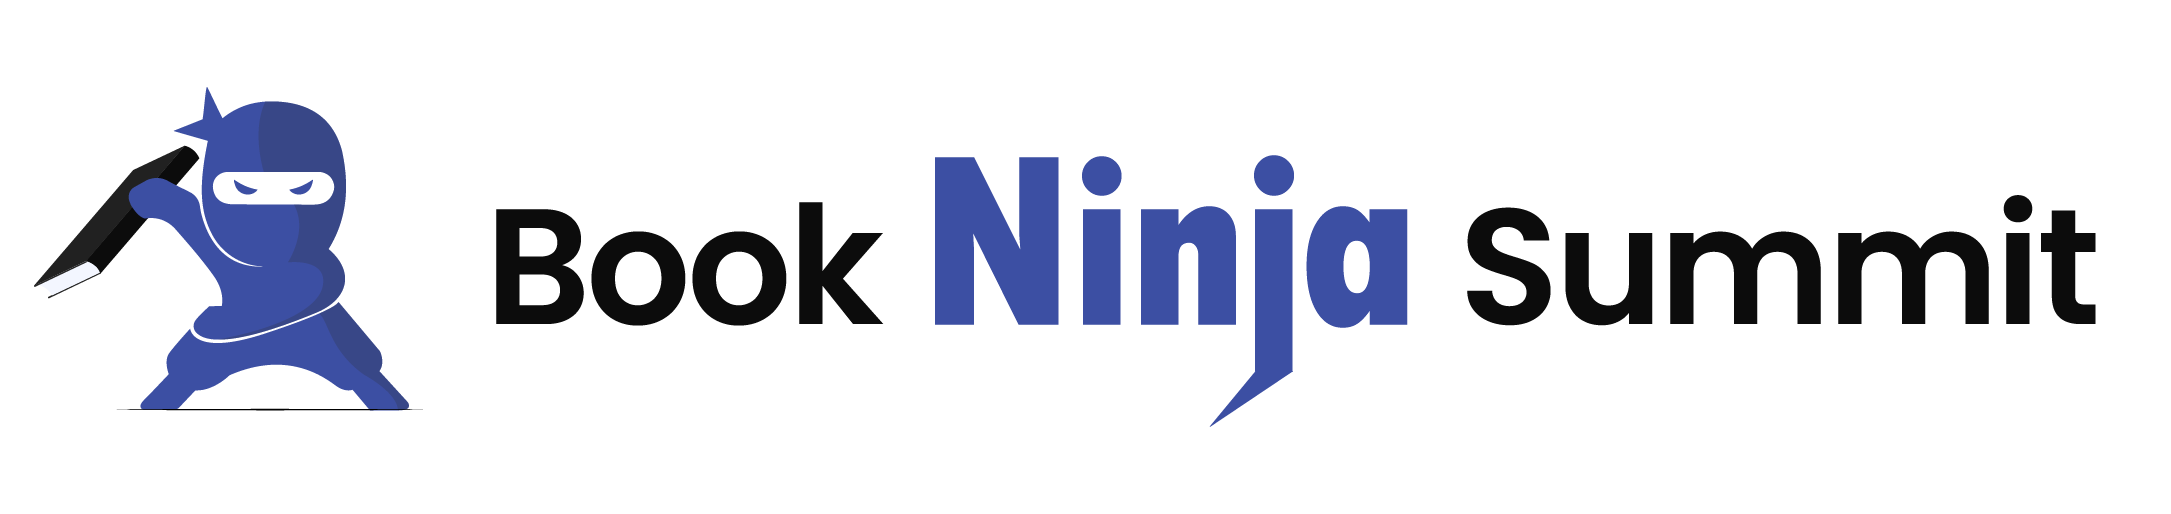 Book Ninja Summit